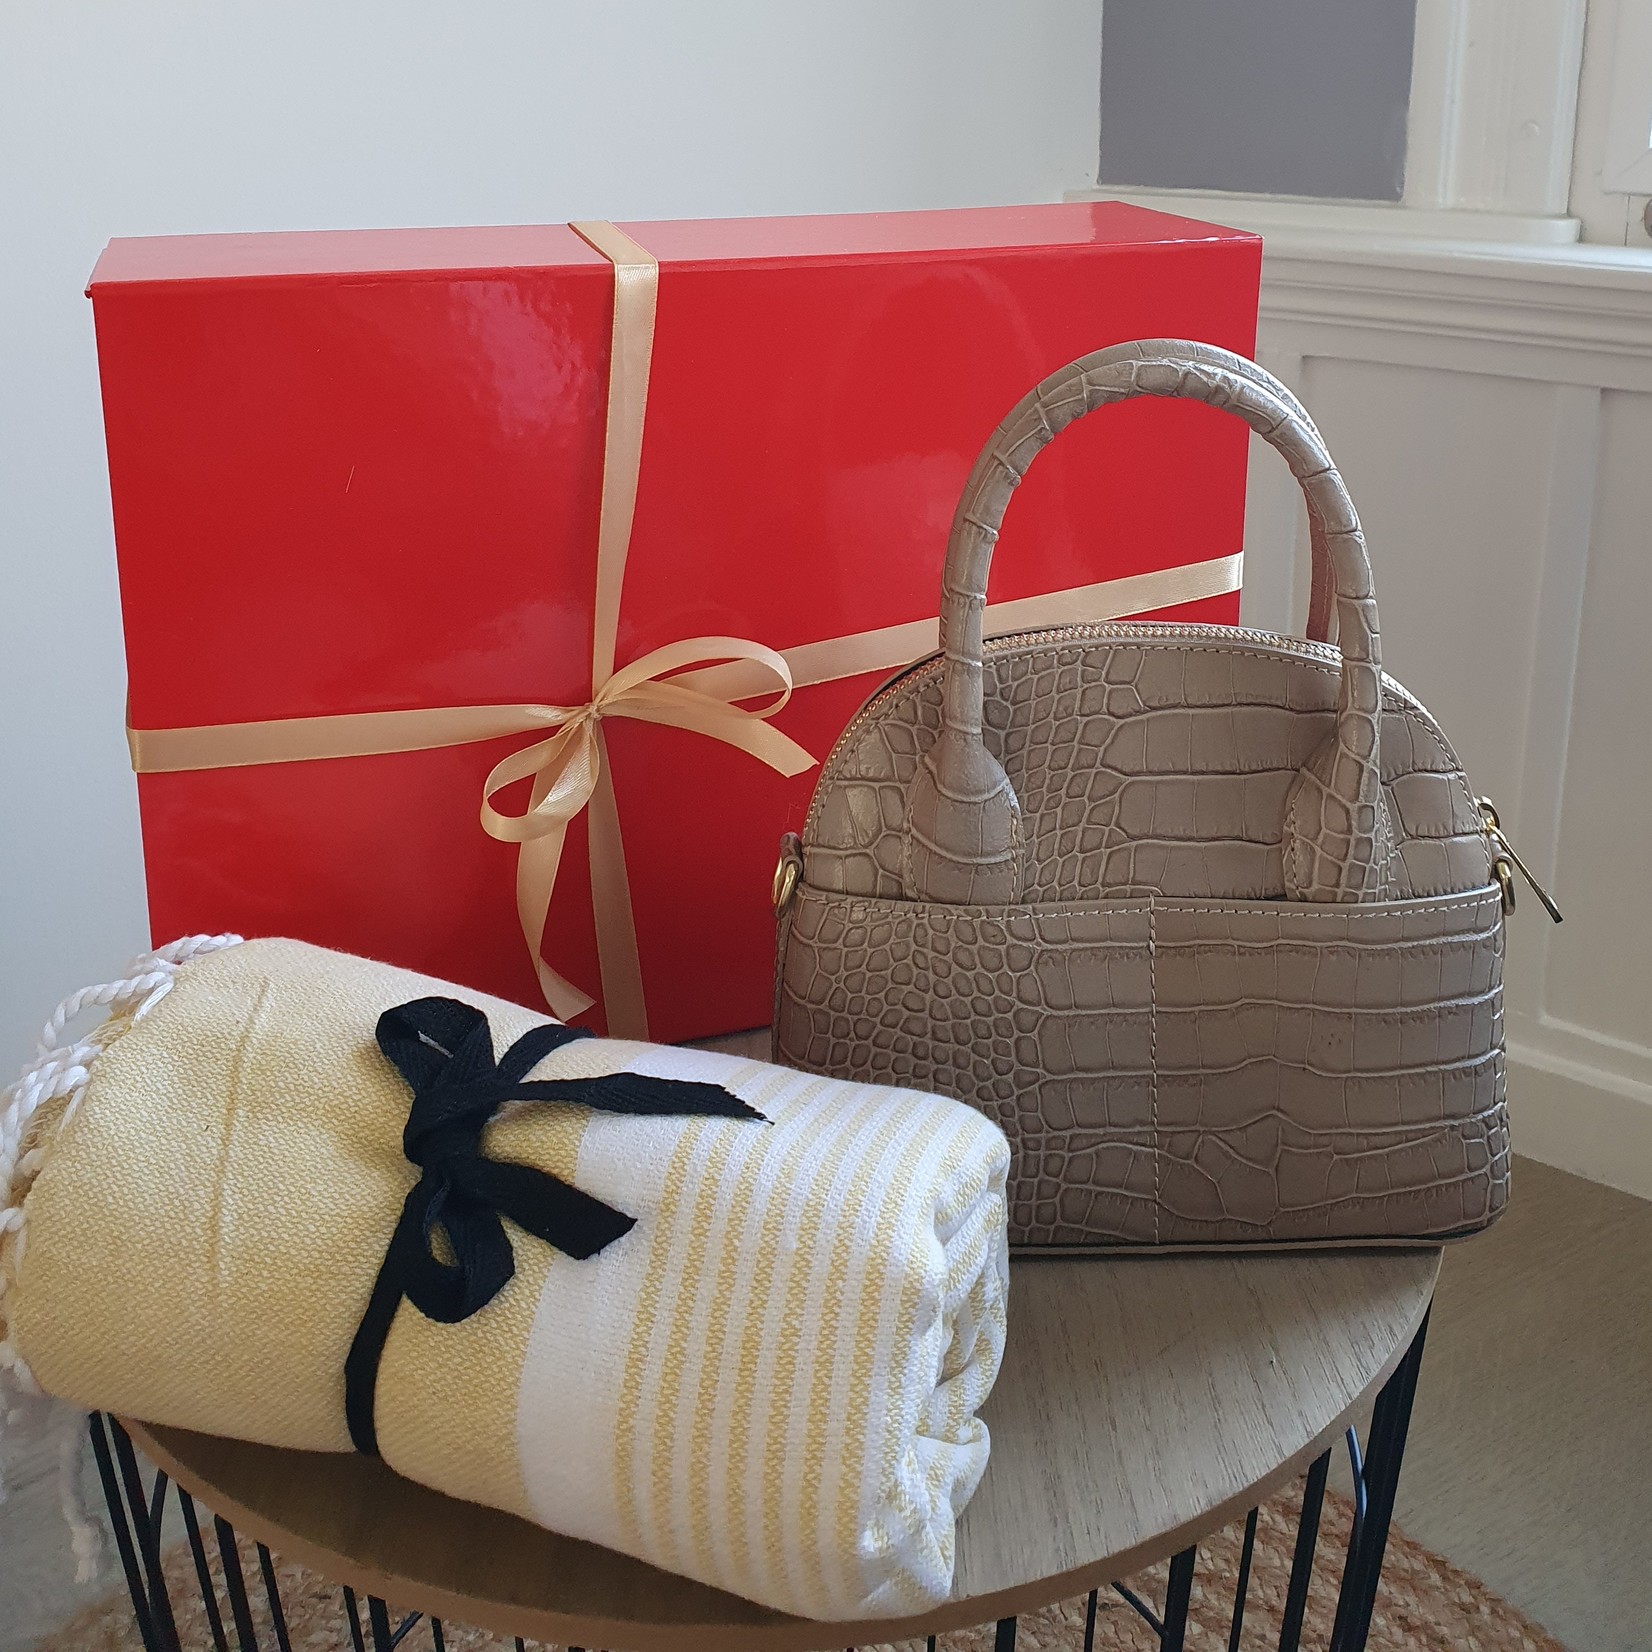 Eve's Gifts Red Gift box - Handbag